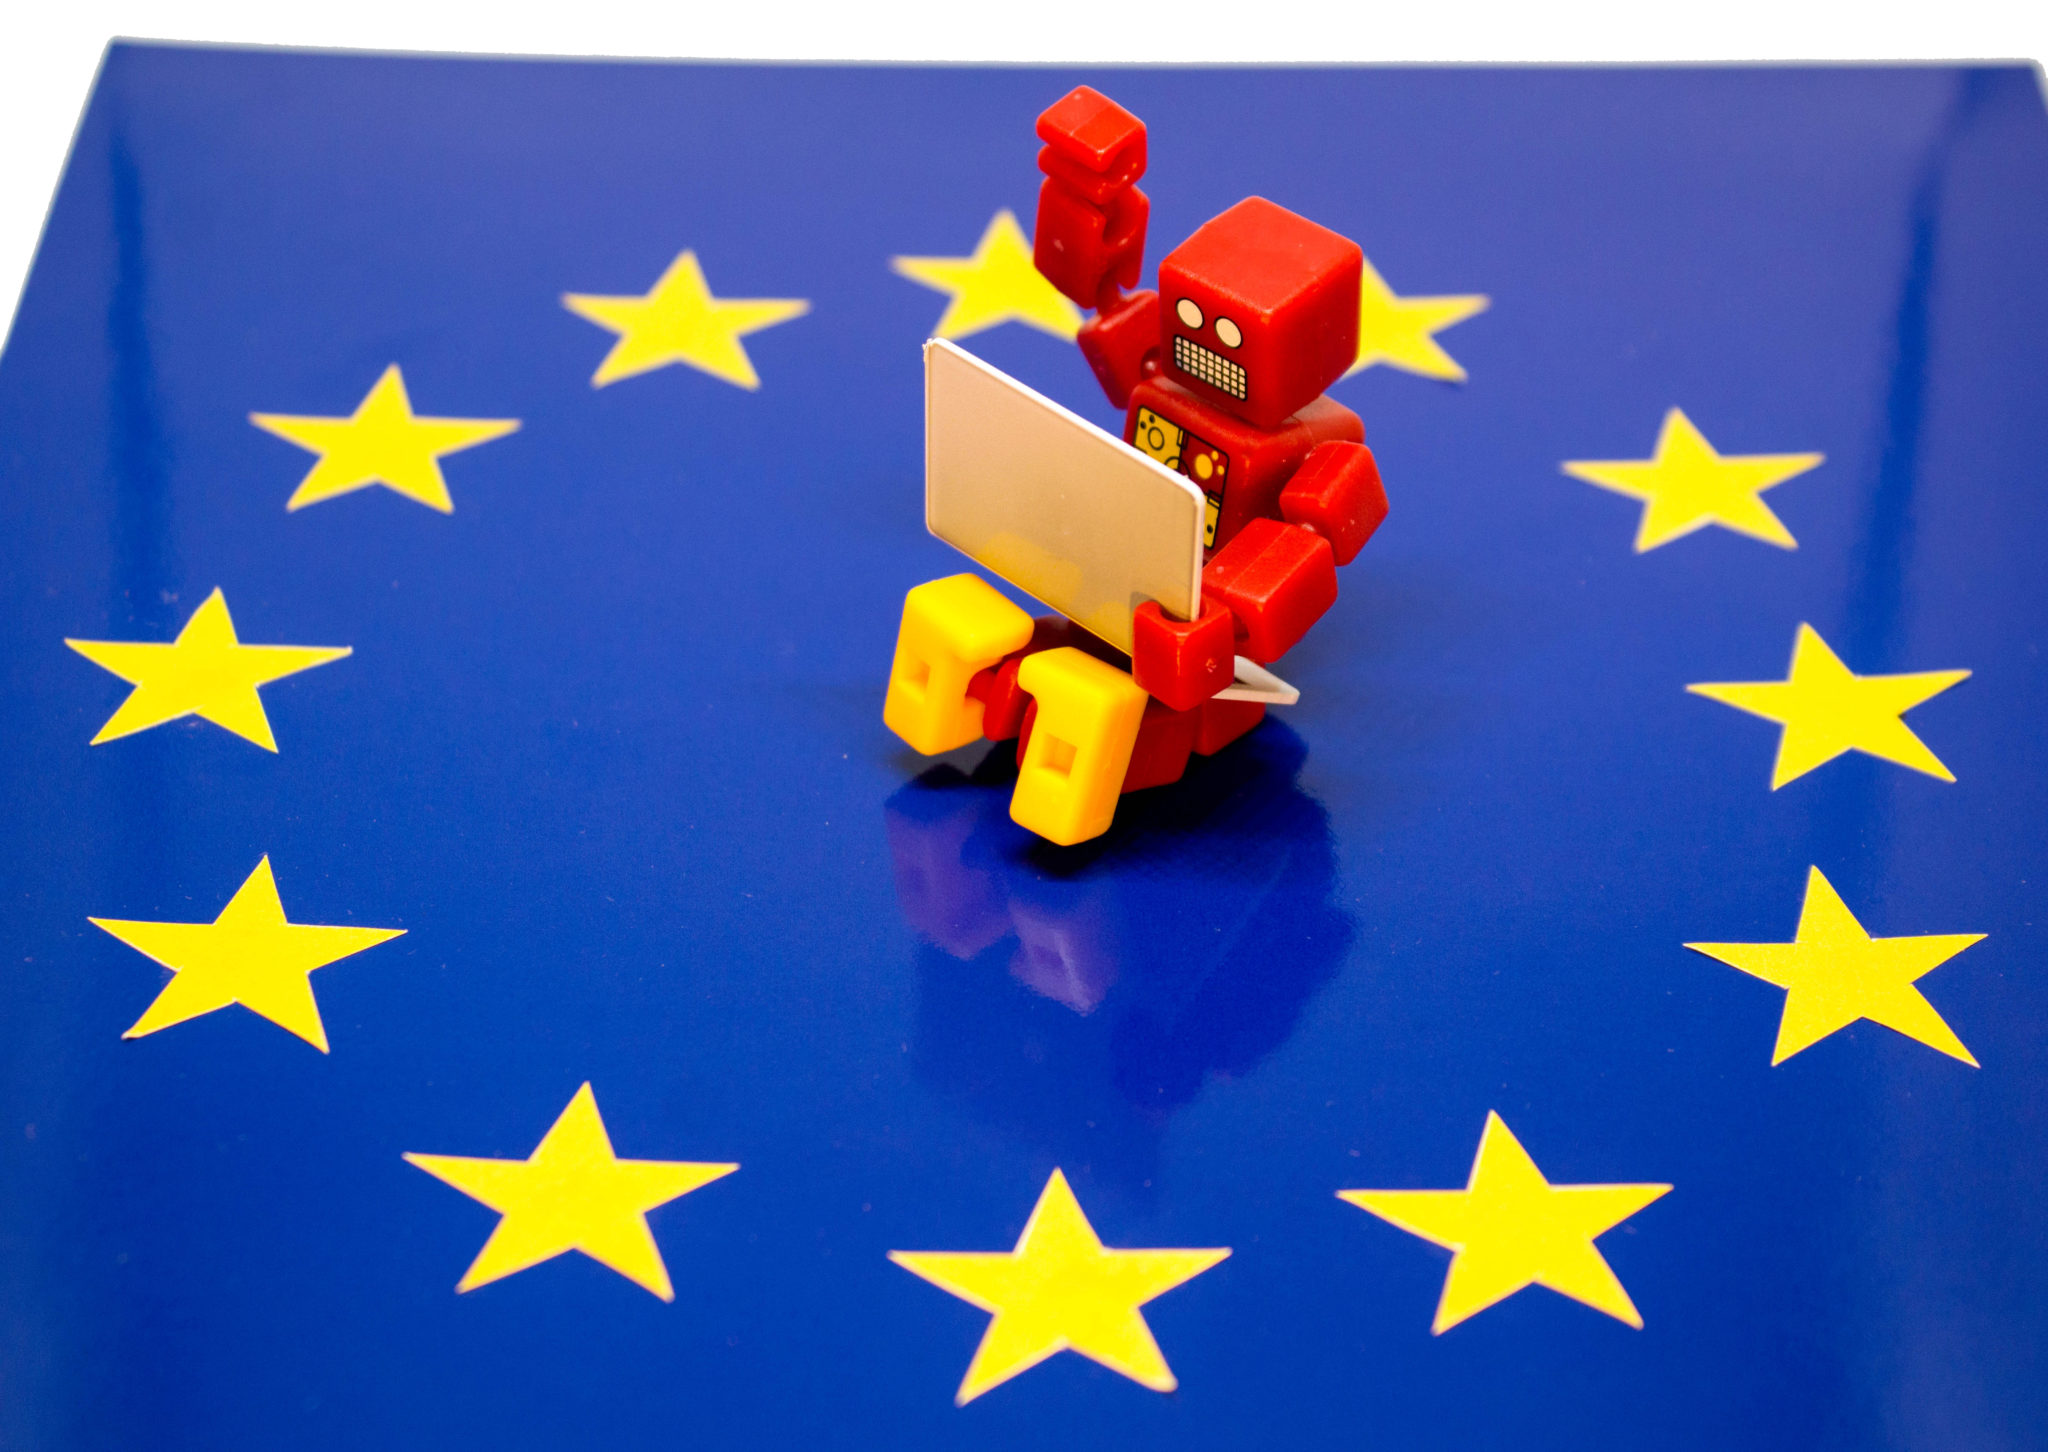 Lego-Roboter sitzt mit Laptop auf EU-Falgge.